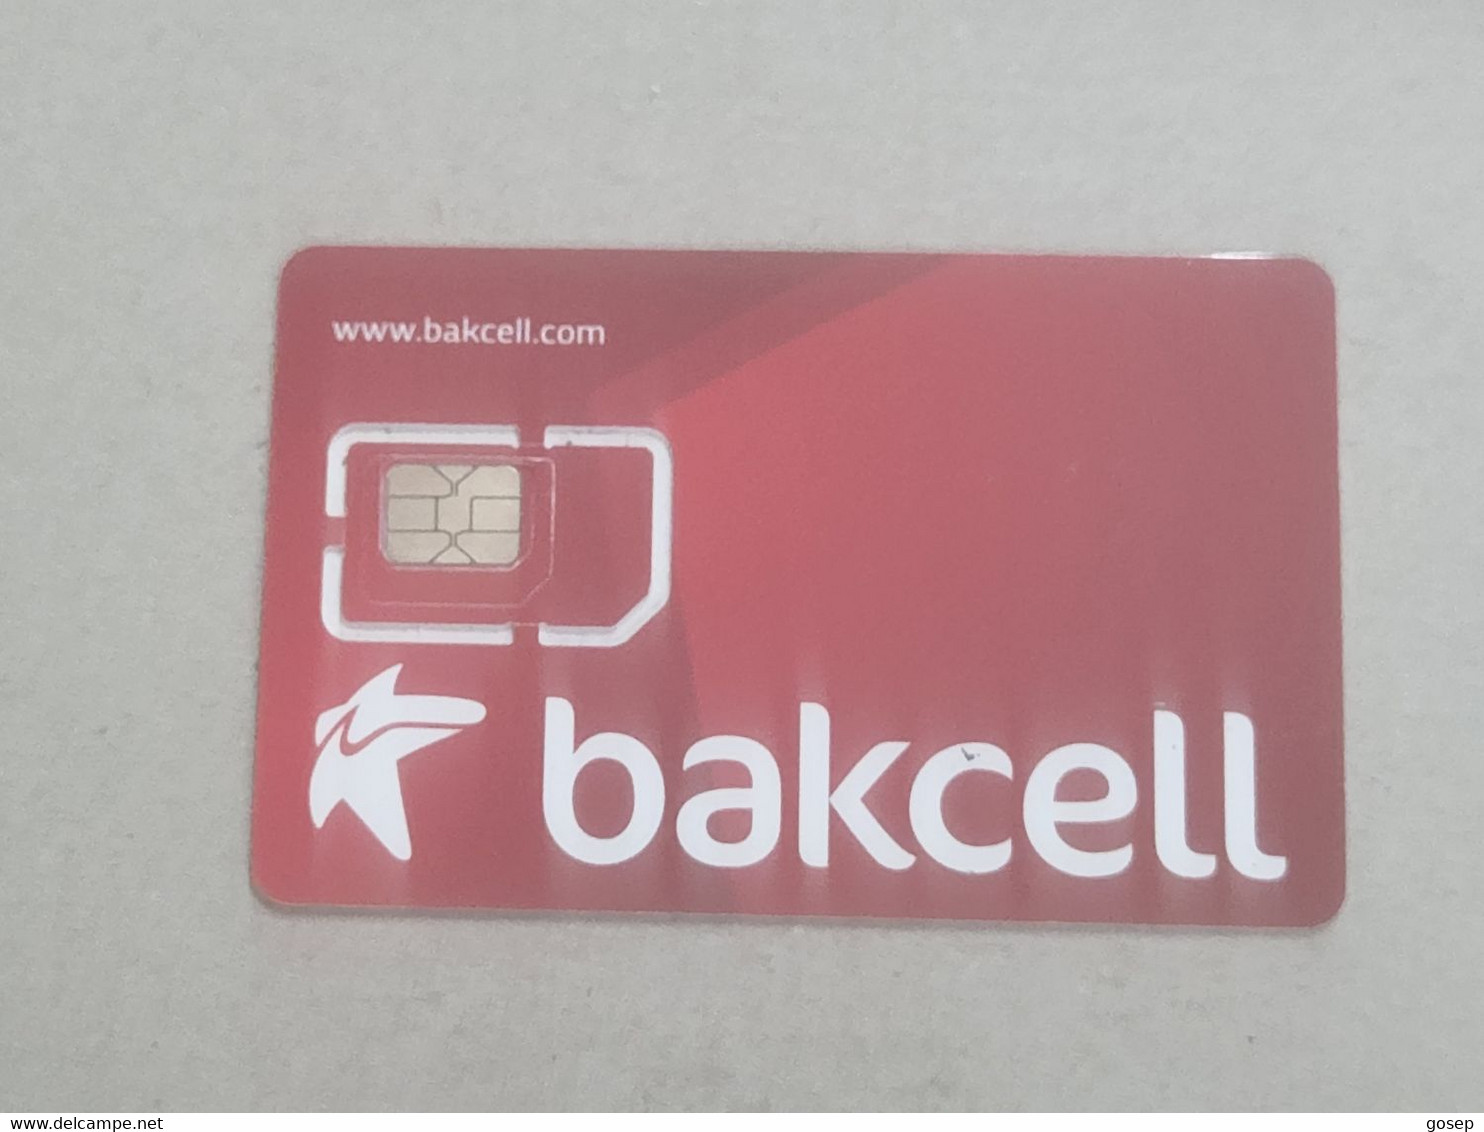 Azerbaijan-SIM CARD-BAKCELL-(8)-(89994550060132543196)-(055-6998727)-(look Out Side Foto)+1card Prepiad Free - Azerbeidzjan